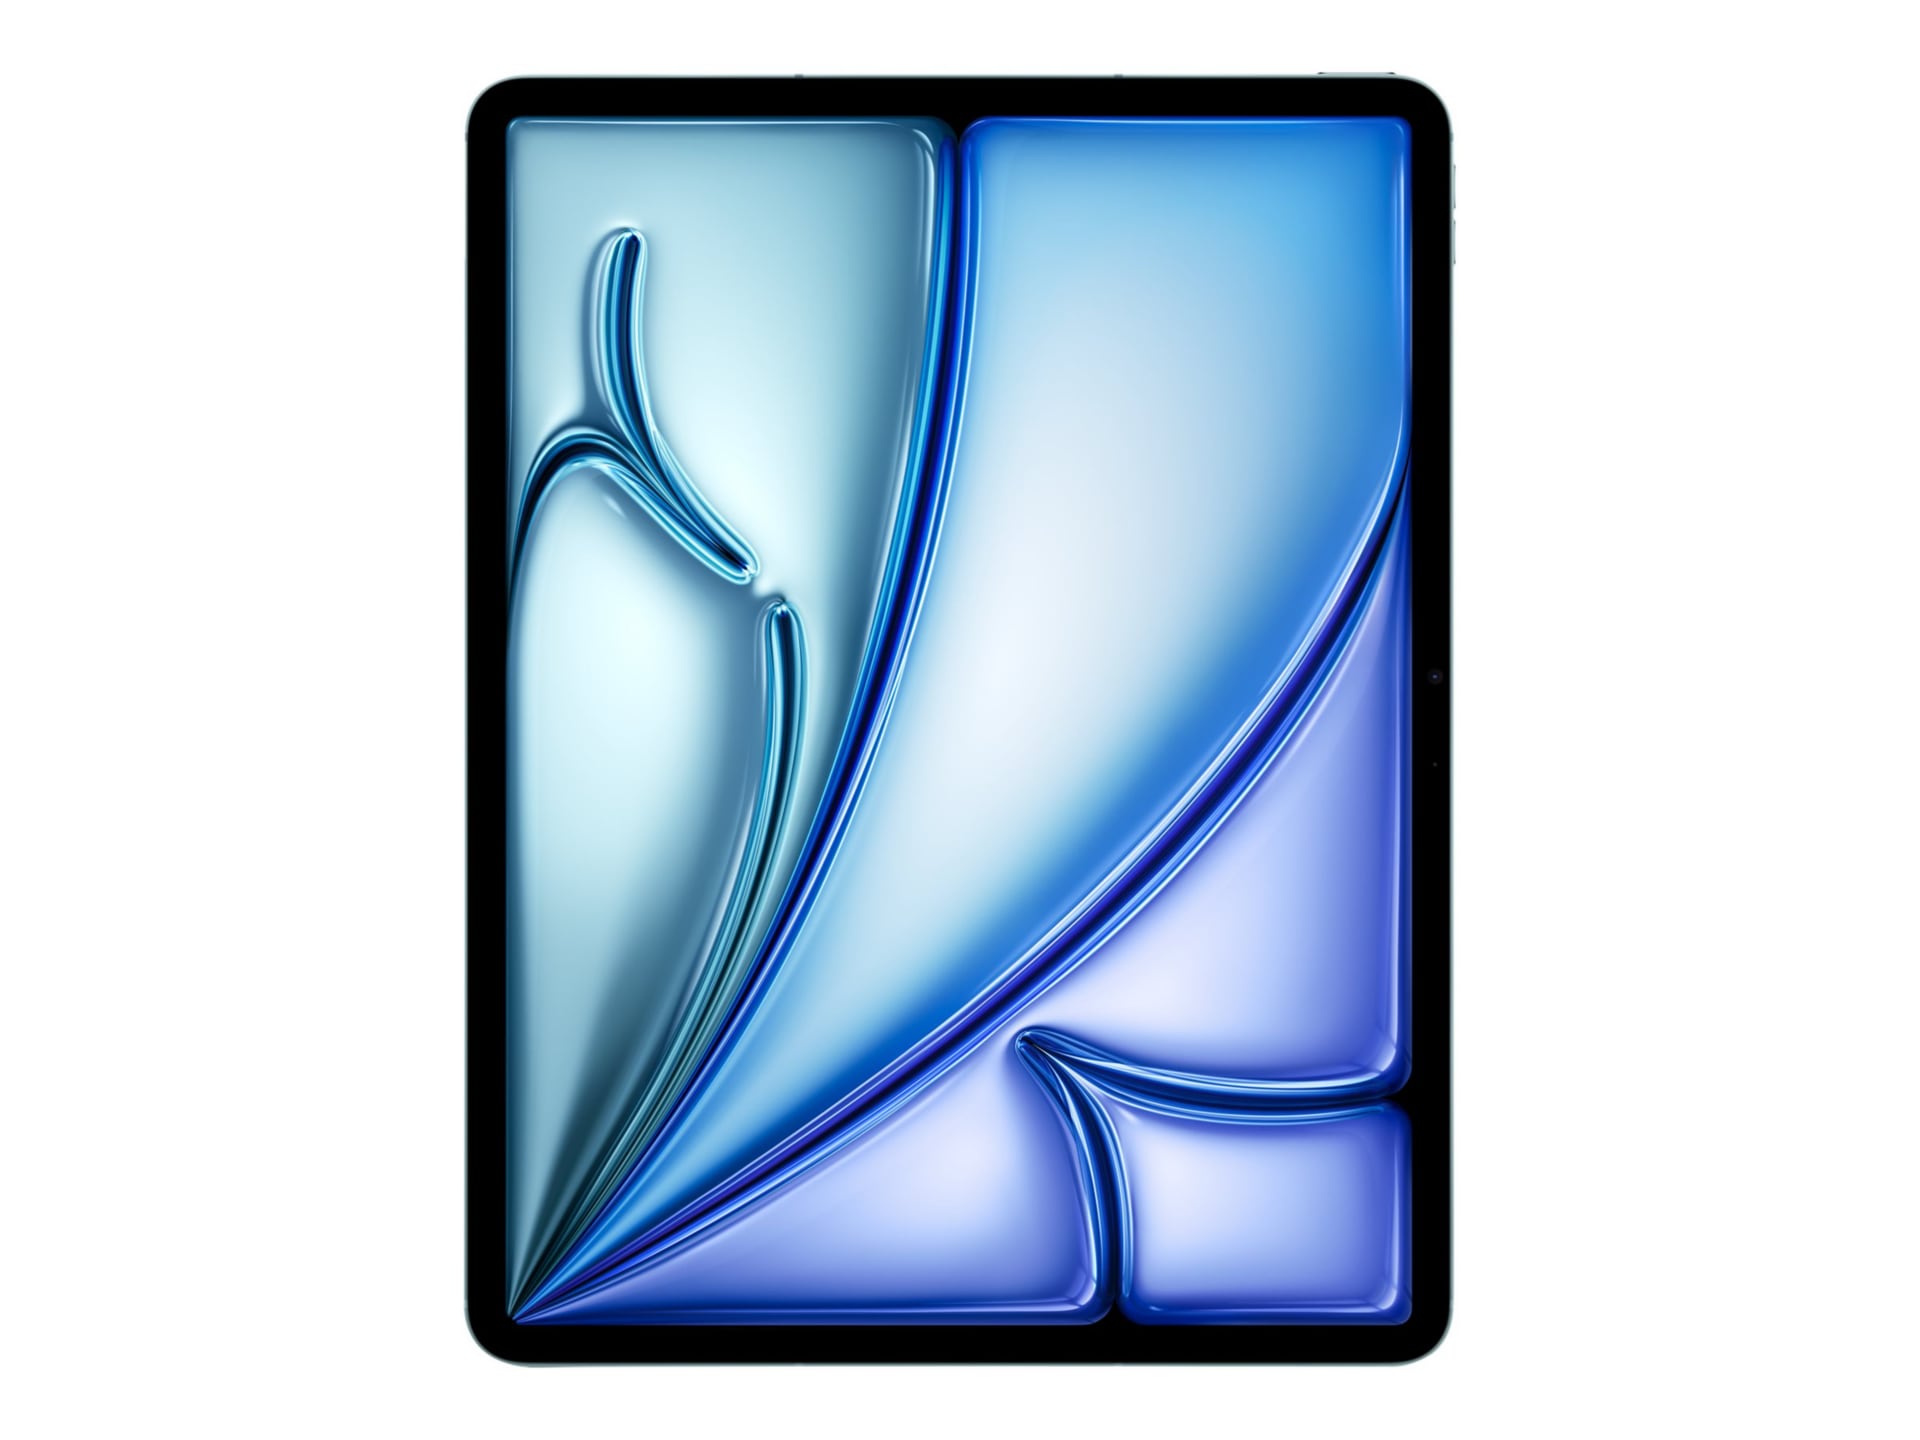 Apple 13-inch iPad Air - M2 - Wi-Fi + Cellular - tablet - 128GB - Blue